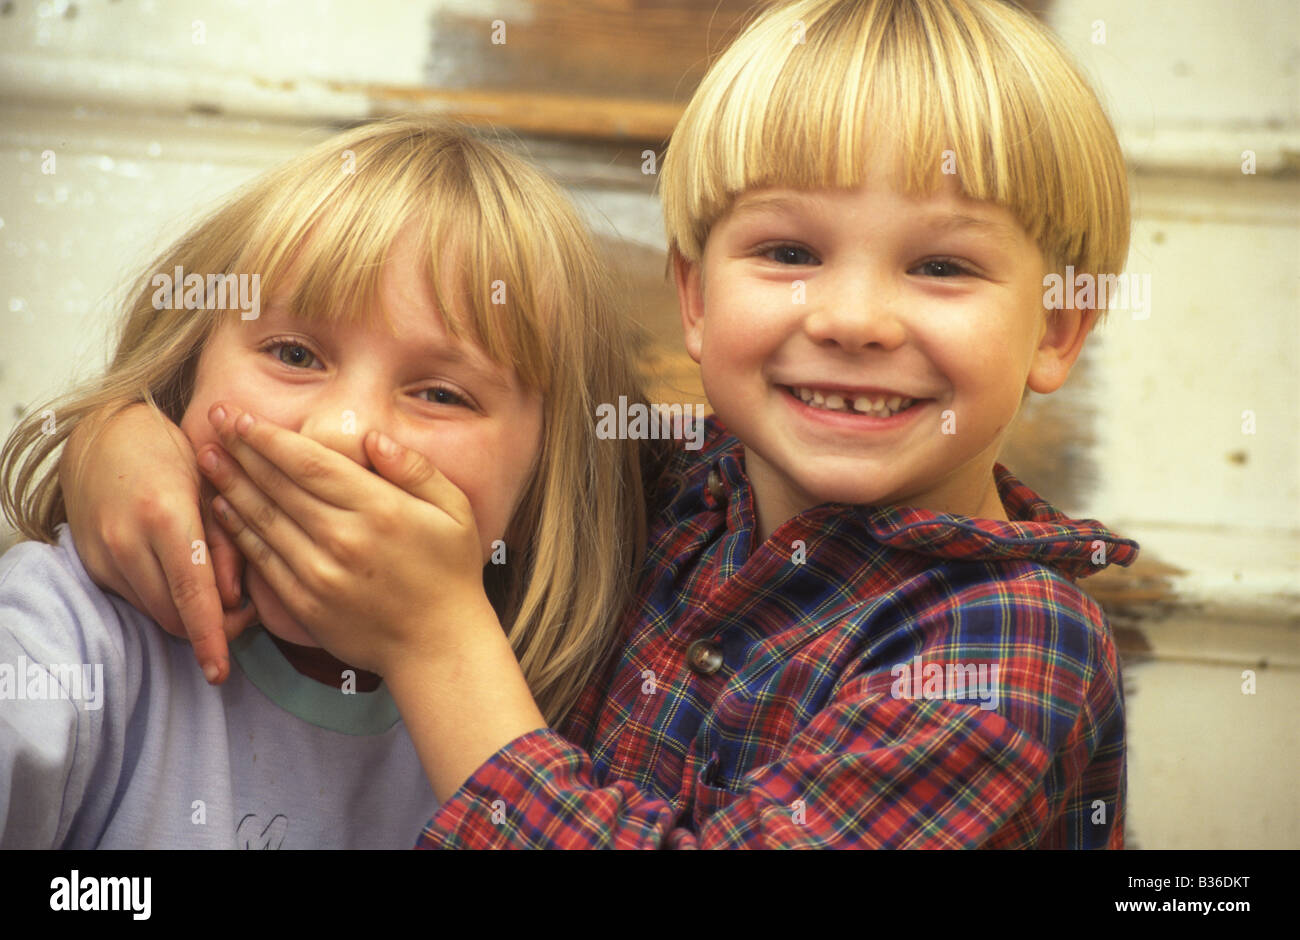 children mucking around together Stock Photo